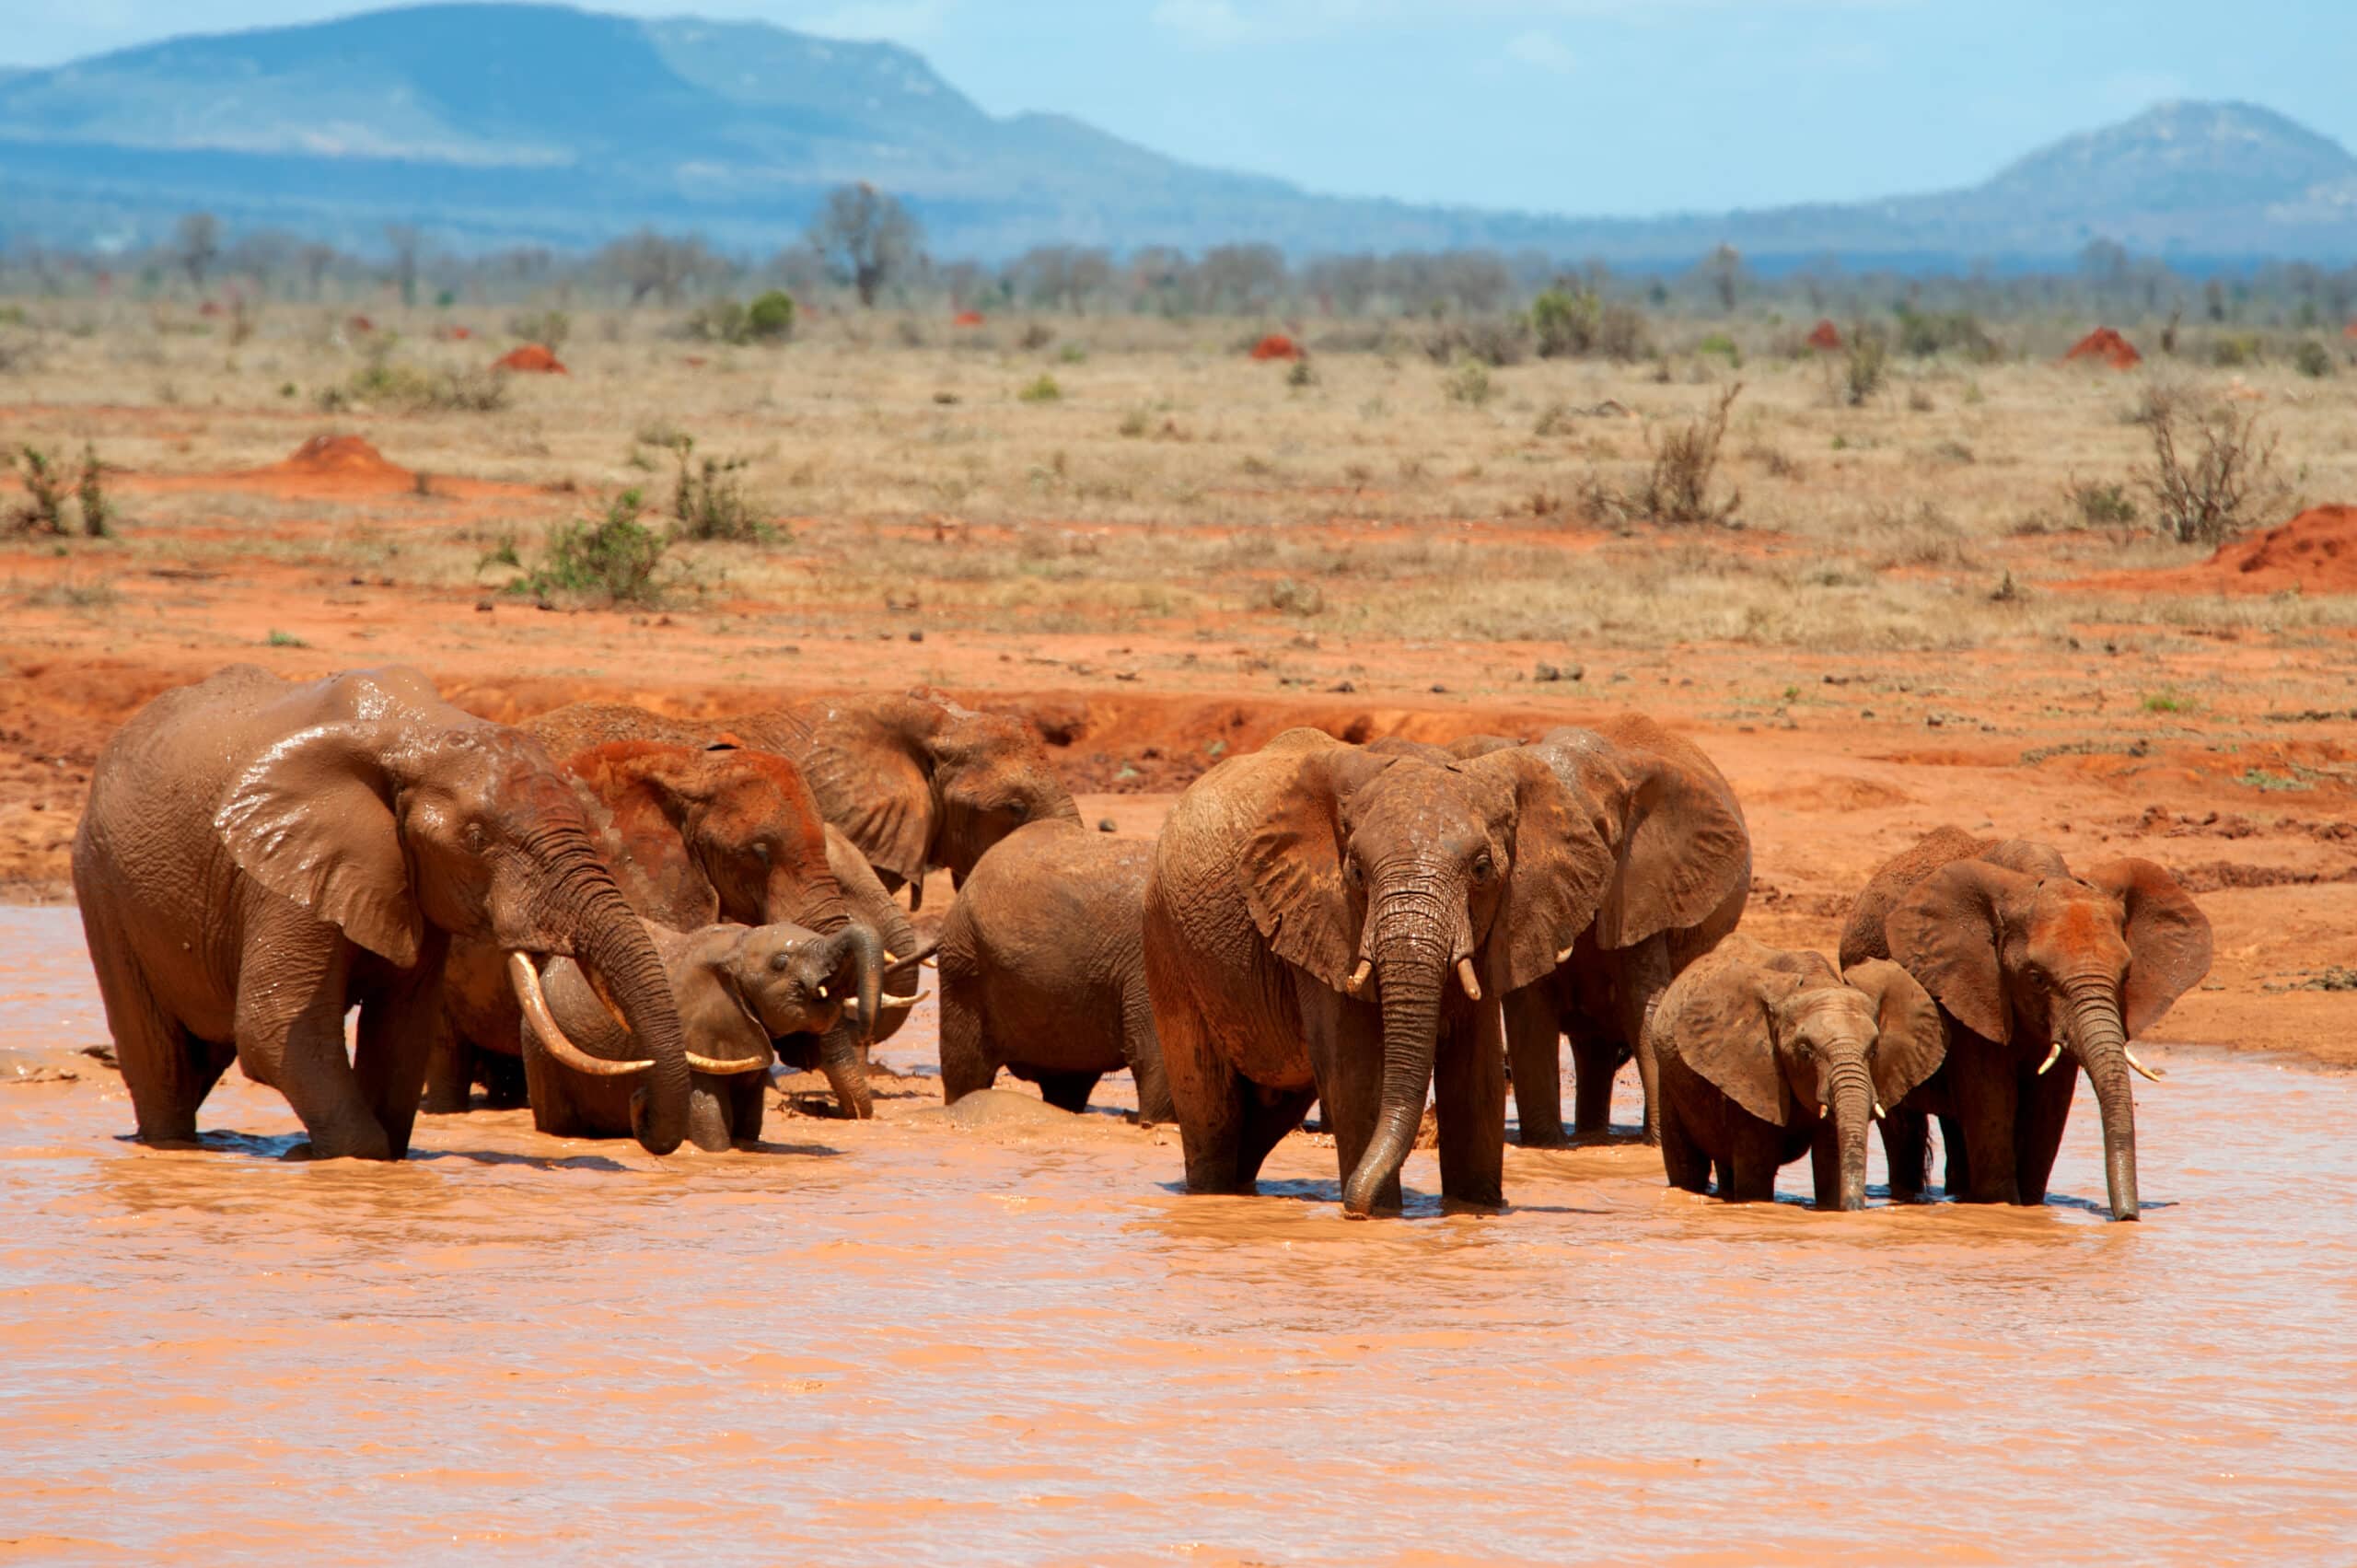 elephant in water national park of kenya 2021 08 26 15 56 05 utc 1 scaled